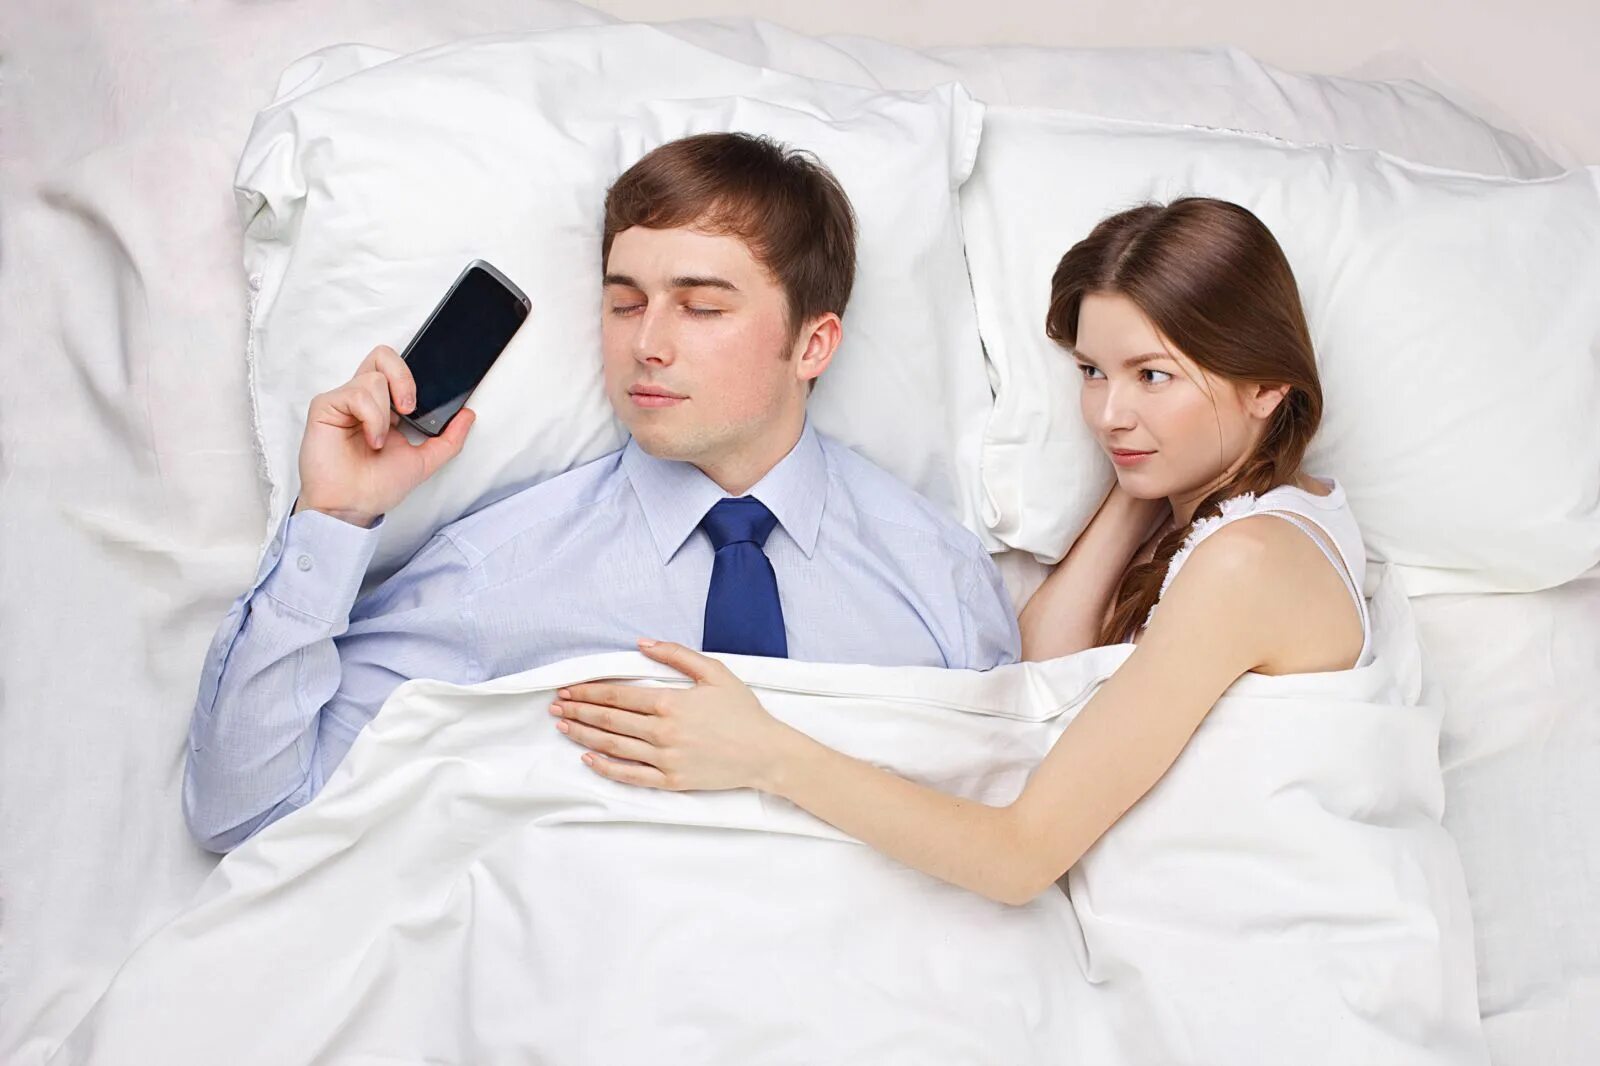 Измена с разговорами. Мужчина с телефоном в кровати. Мужчина и женщина с телефоном. В постели с телефоном. Мужчина в постели с телефоном.